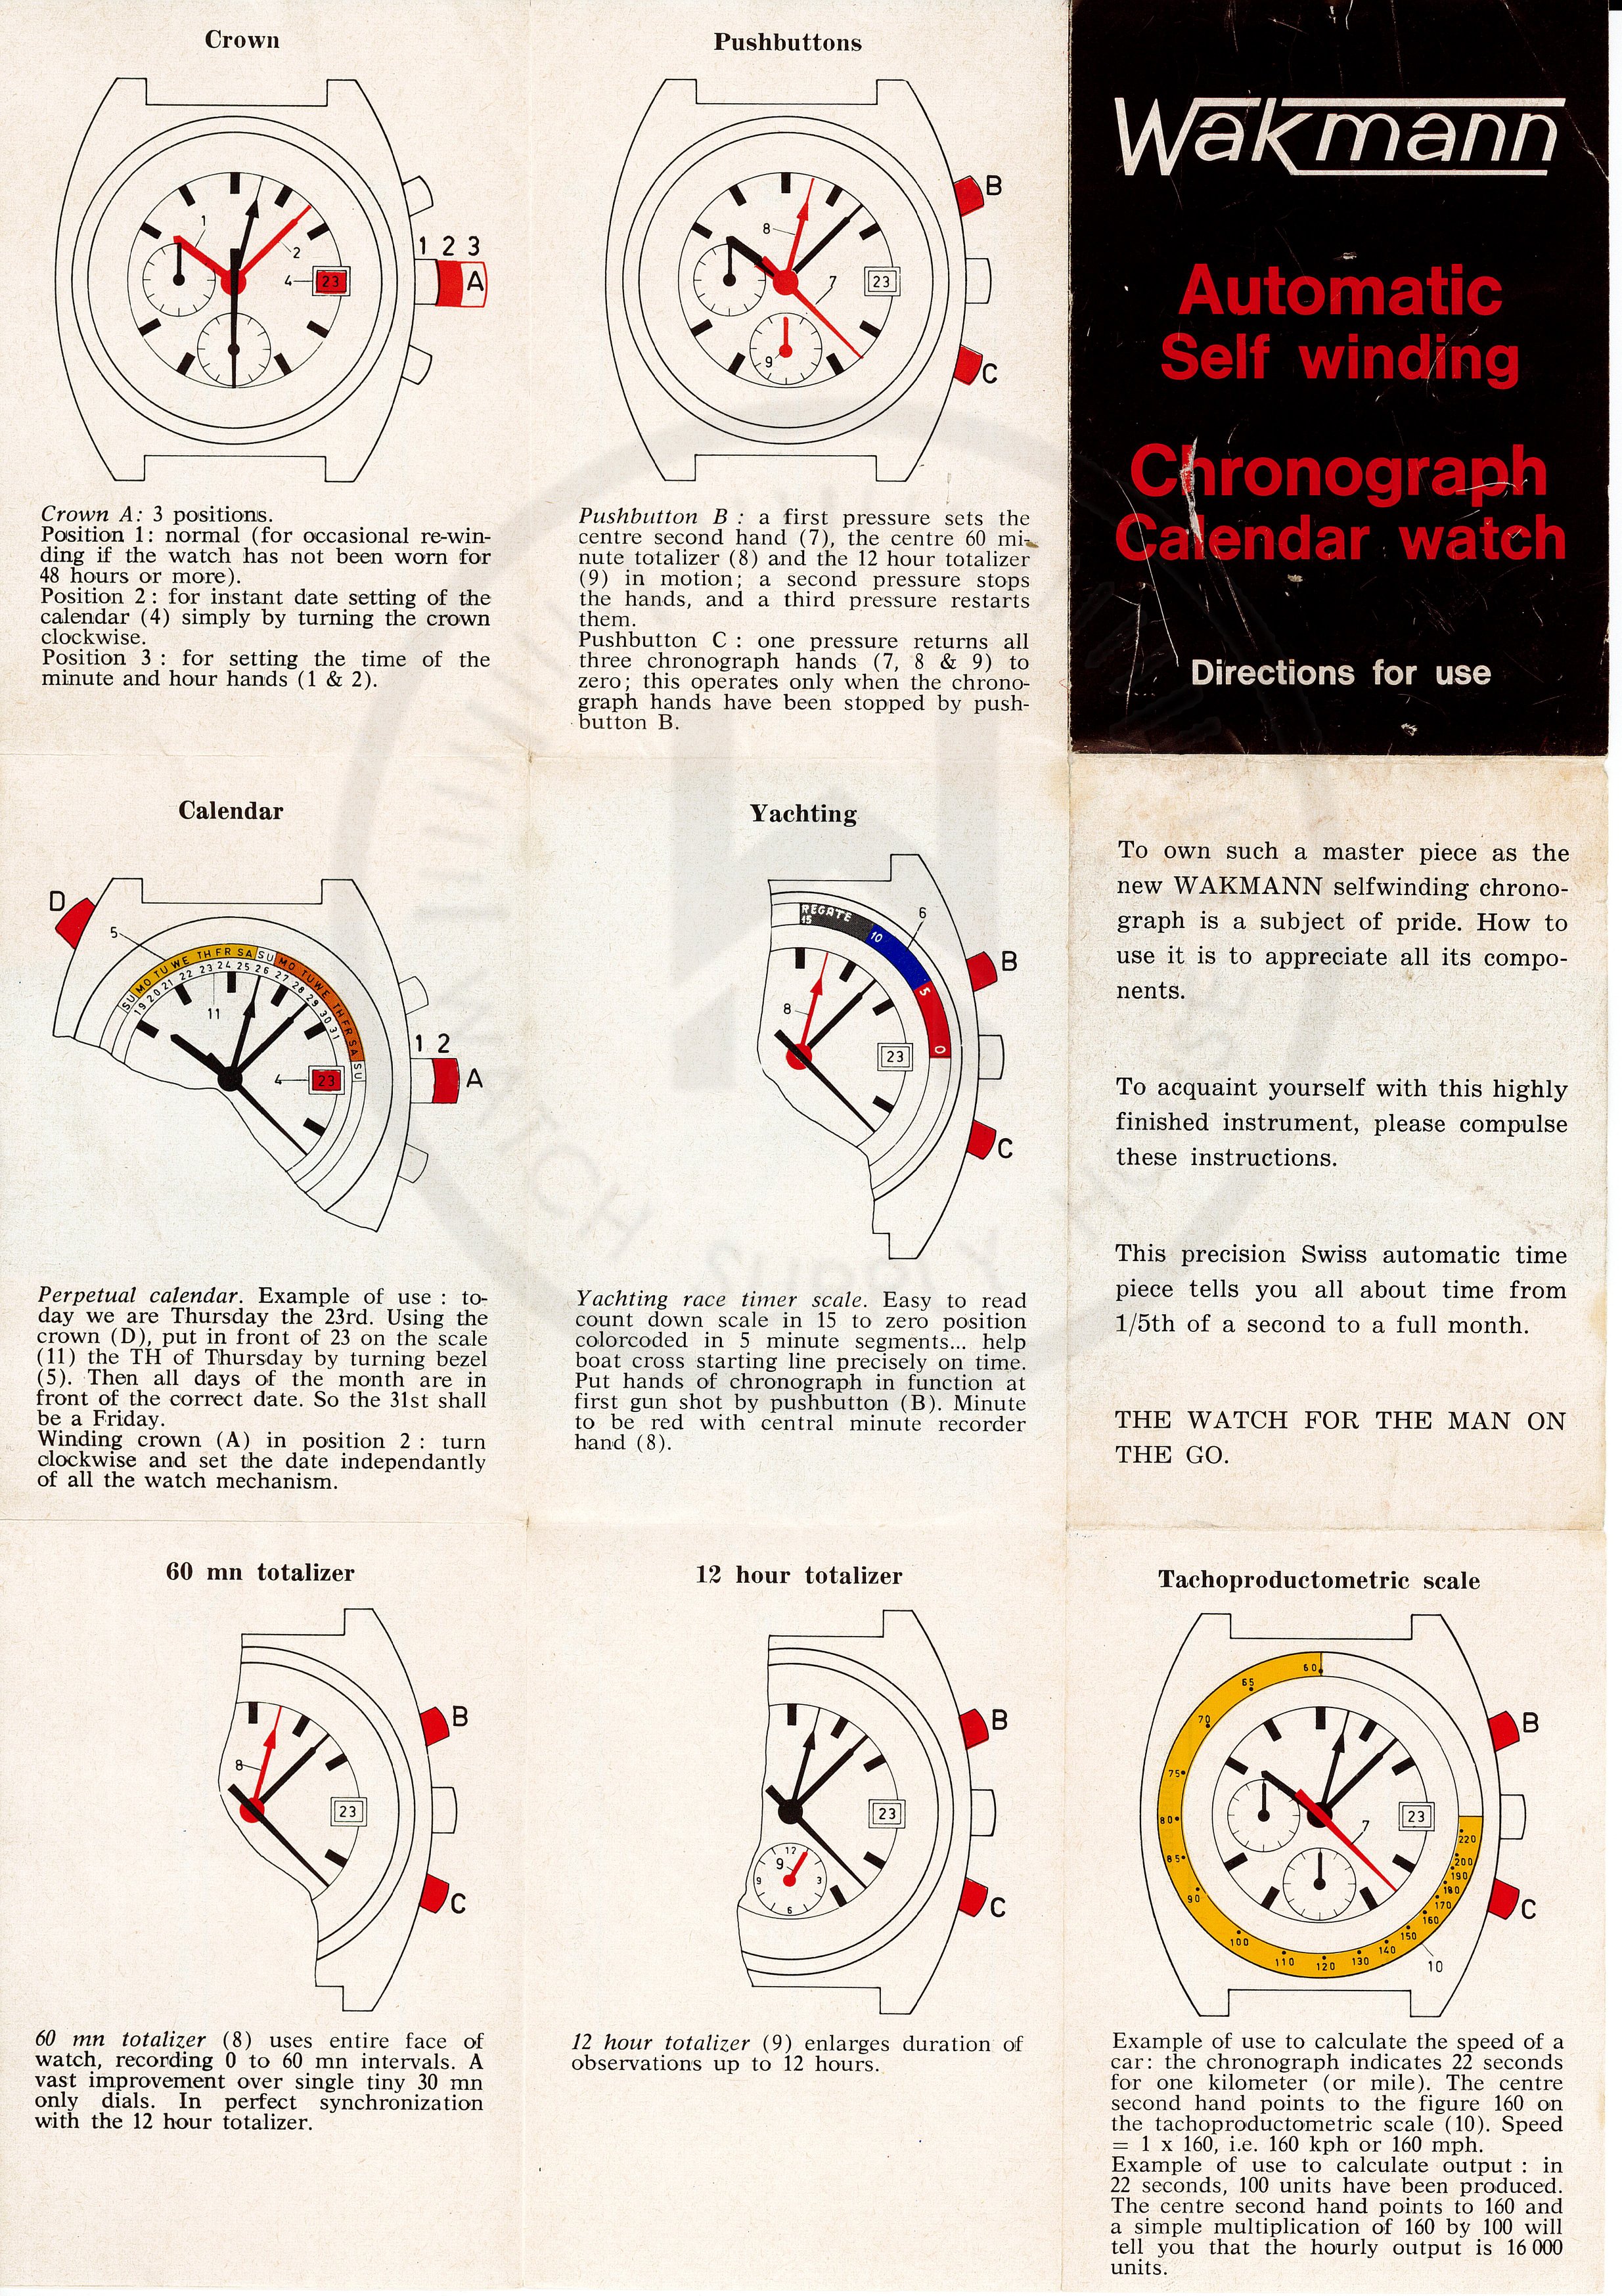 Wakmann Regate Automatic Chronograph Calendar Watch